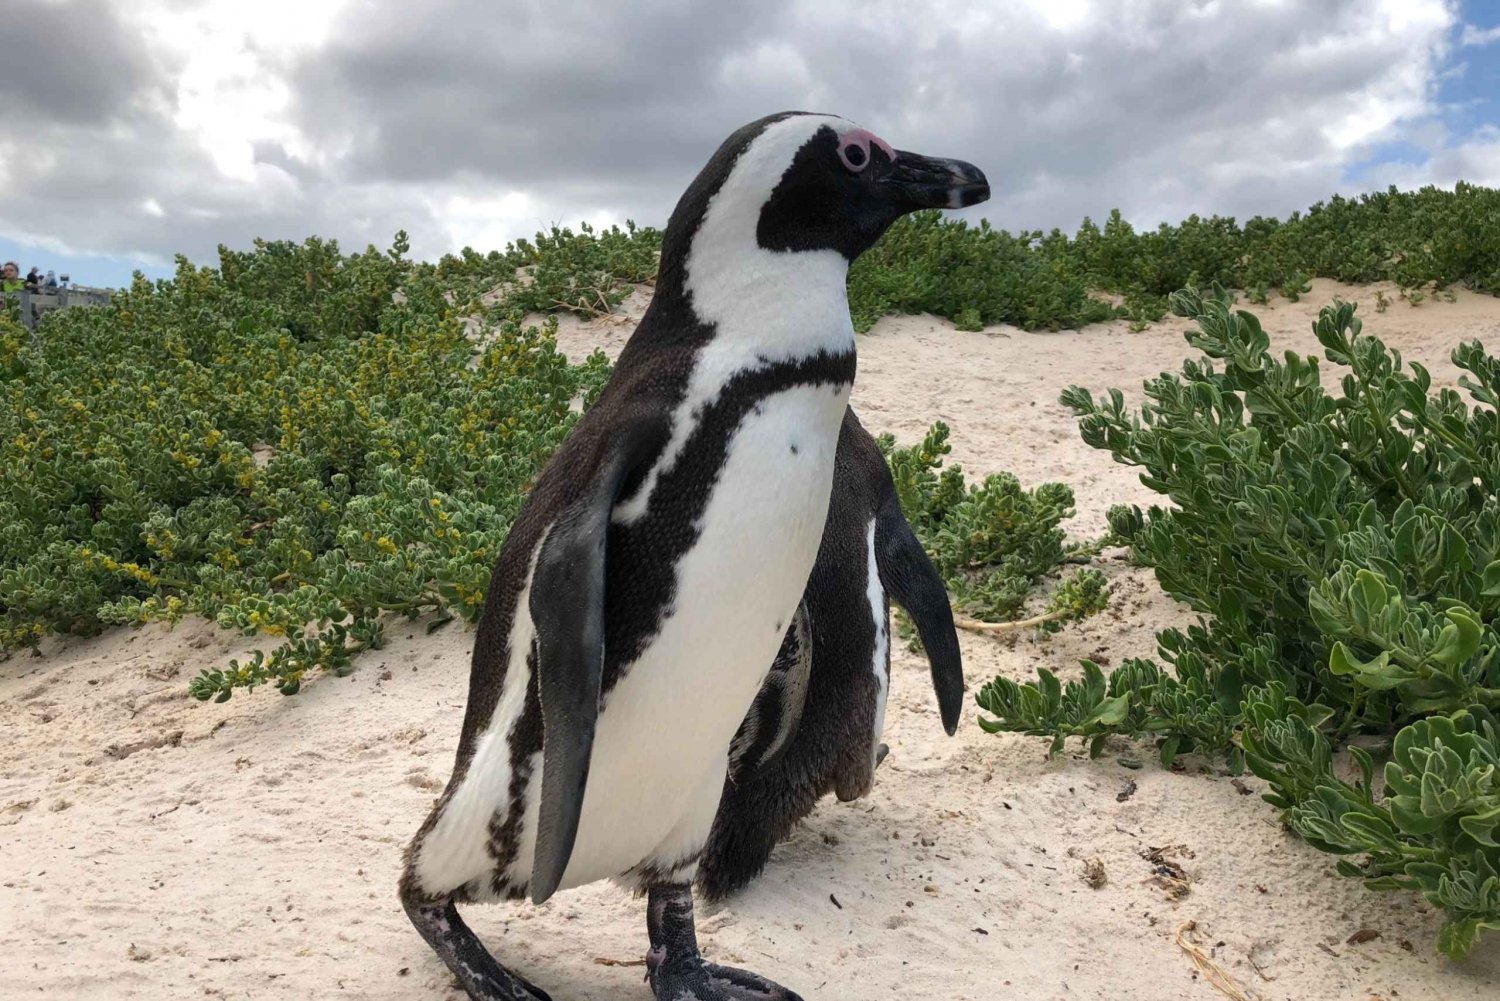 Fra Cape Town: Cape Point, pingviner og vinsmagningstur